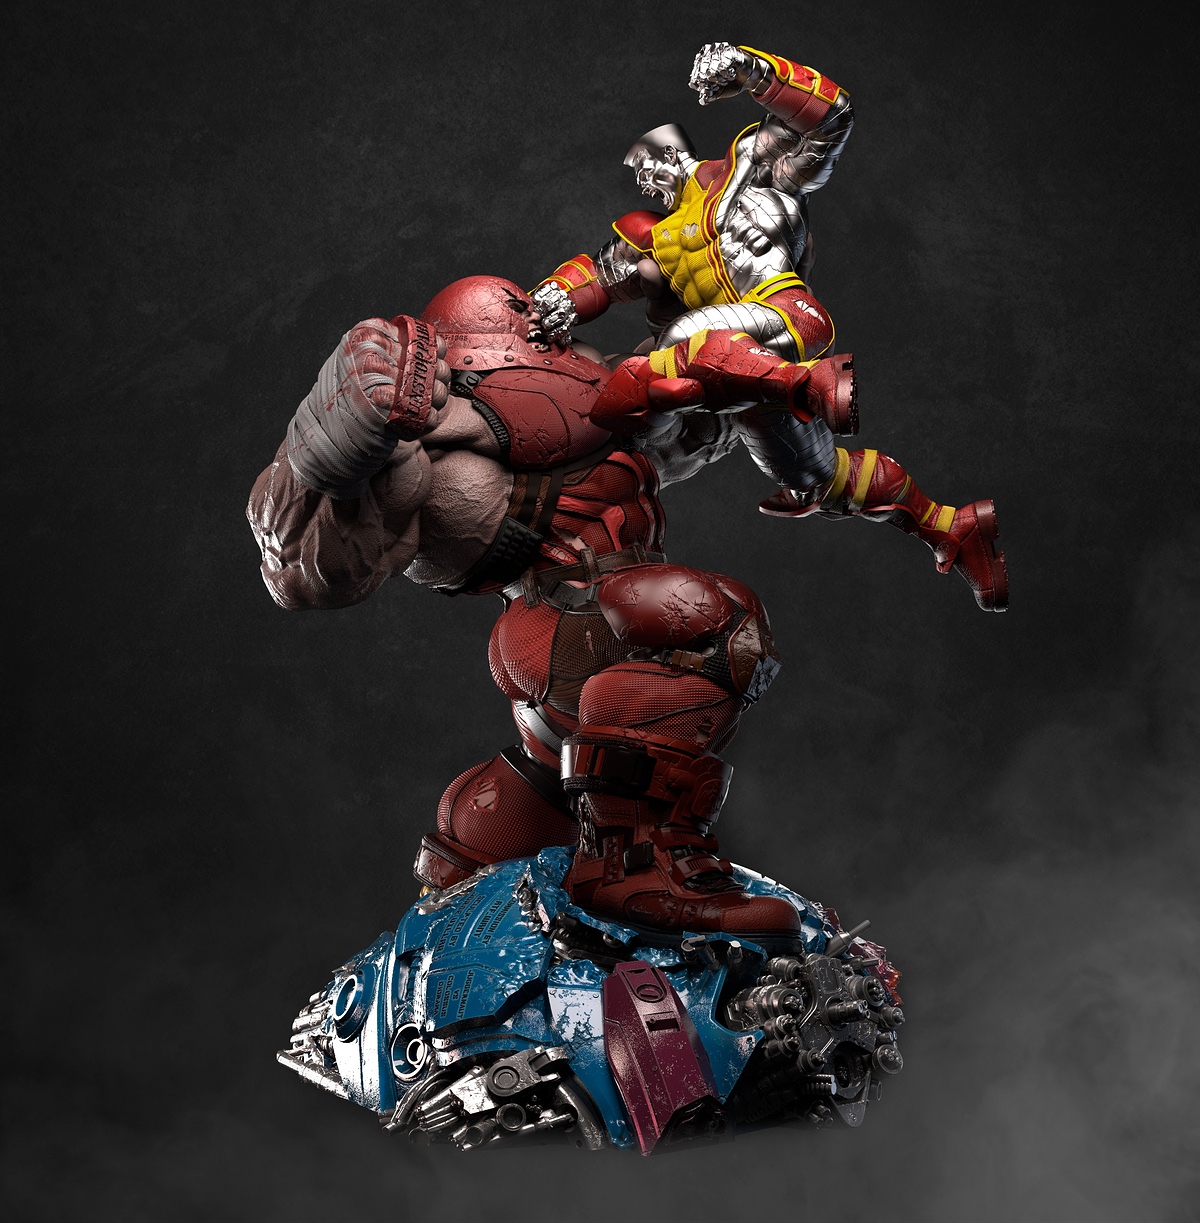 juggernaut vs colossus - image1